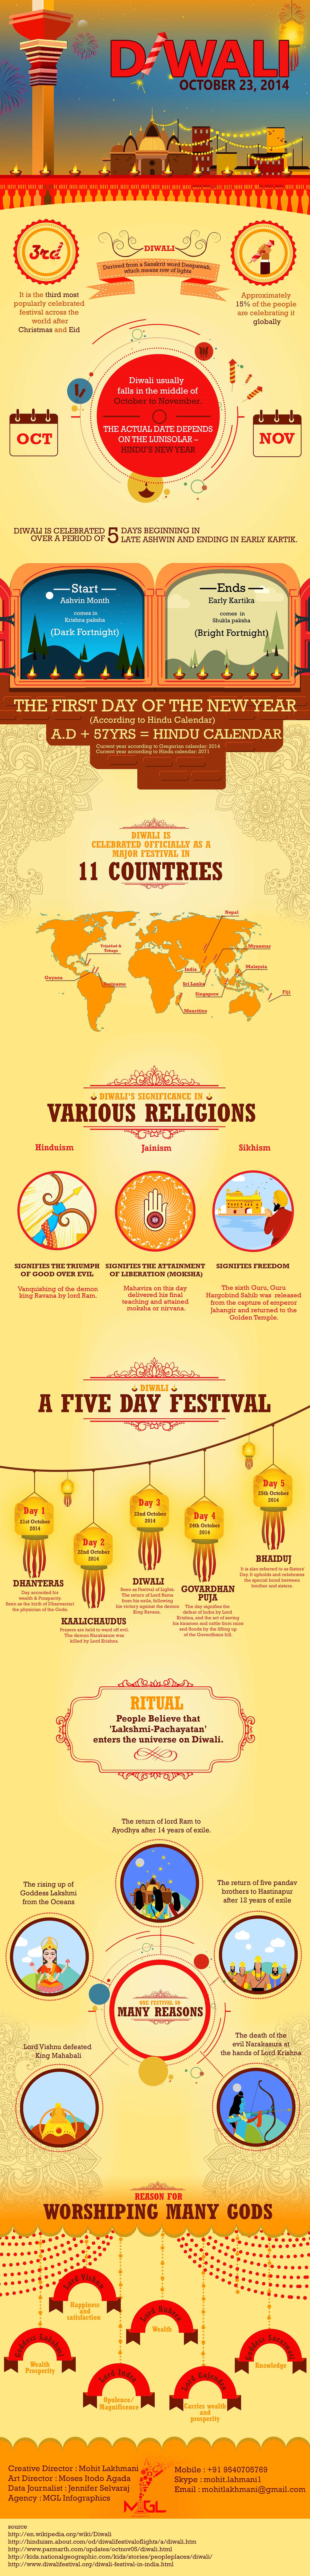 Diwali - festival of lights Infographic